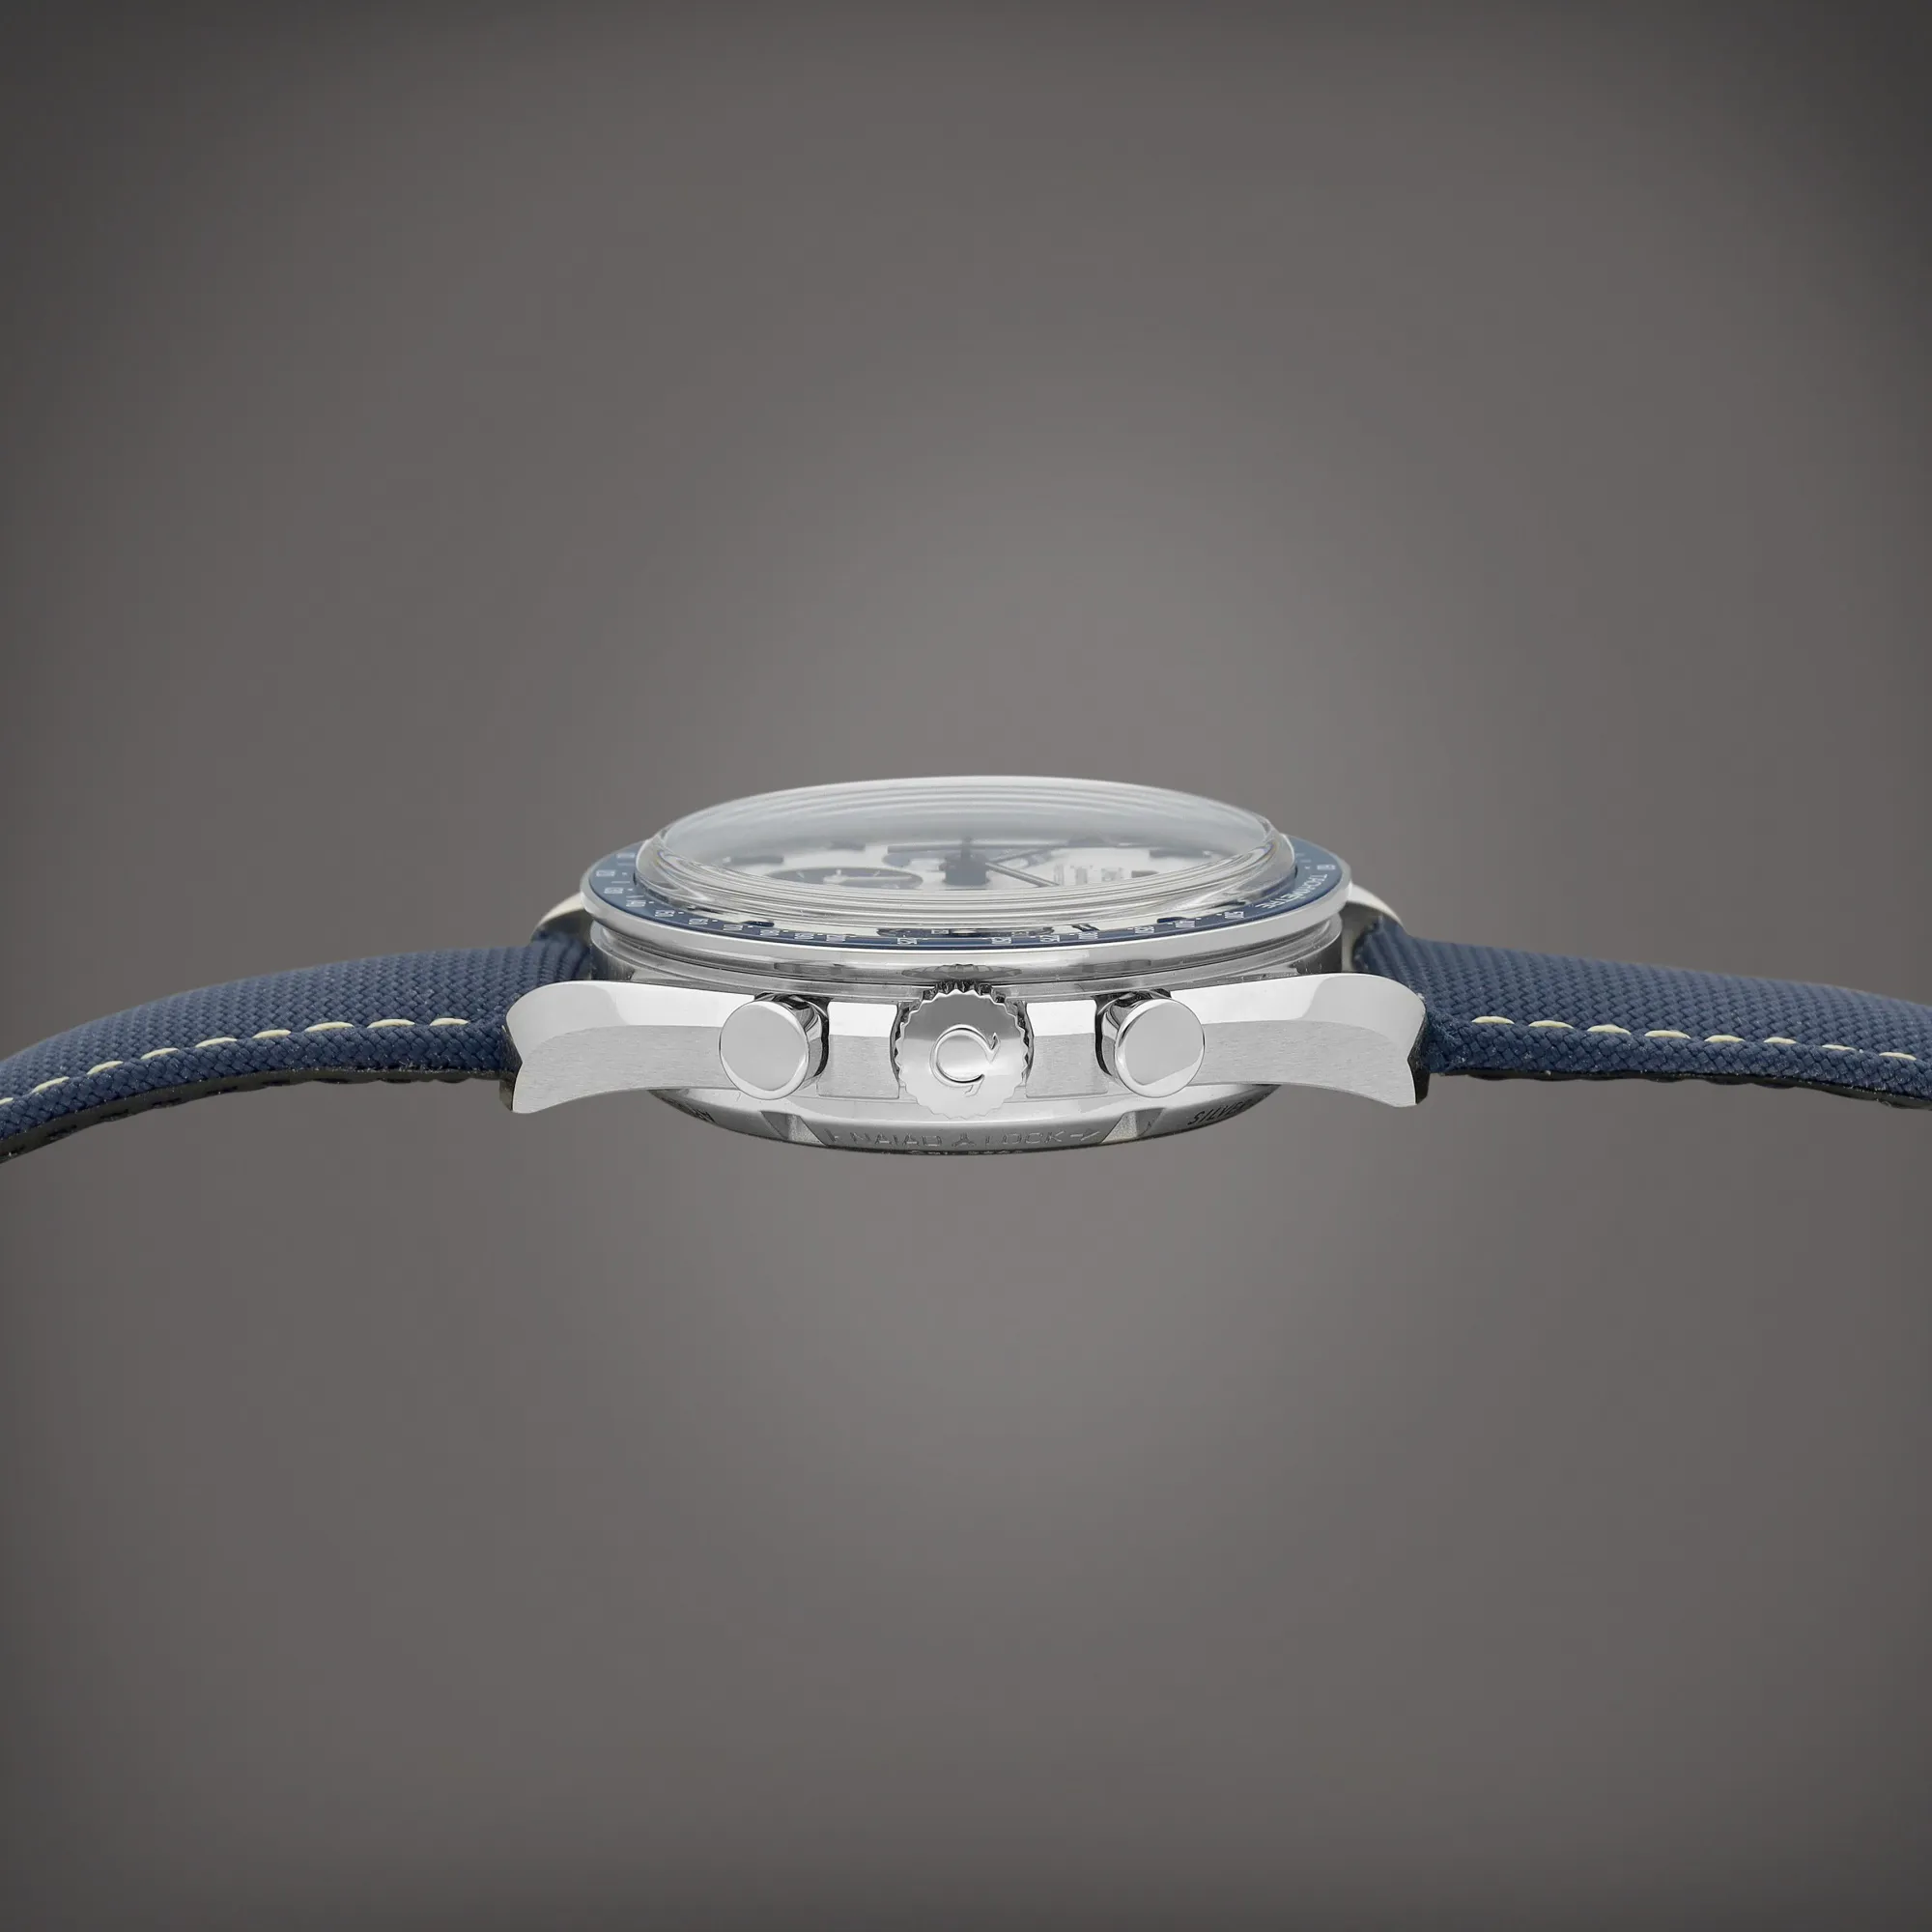 Omega Speedmaster Moon watch 310.32.42.50.02.001 42mm Stainless steel Silver 2